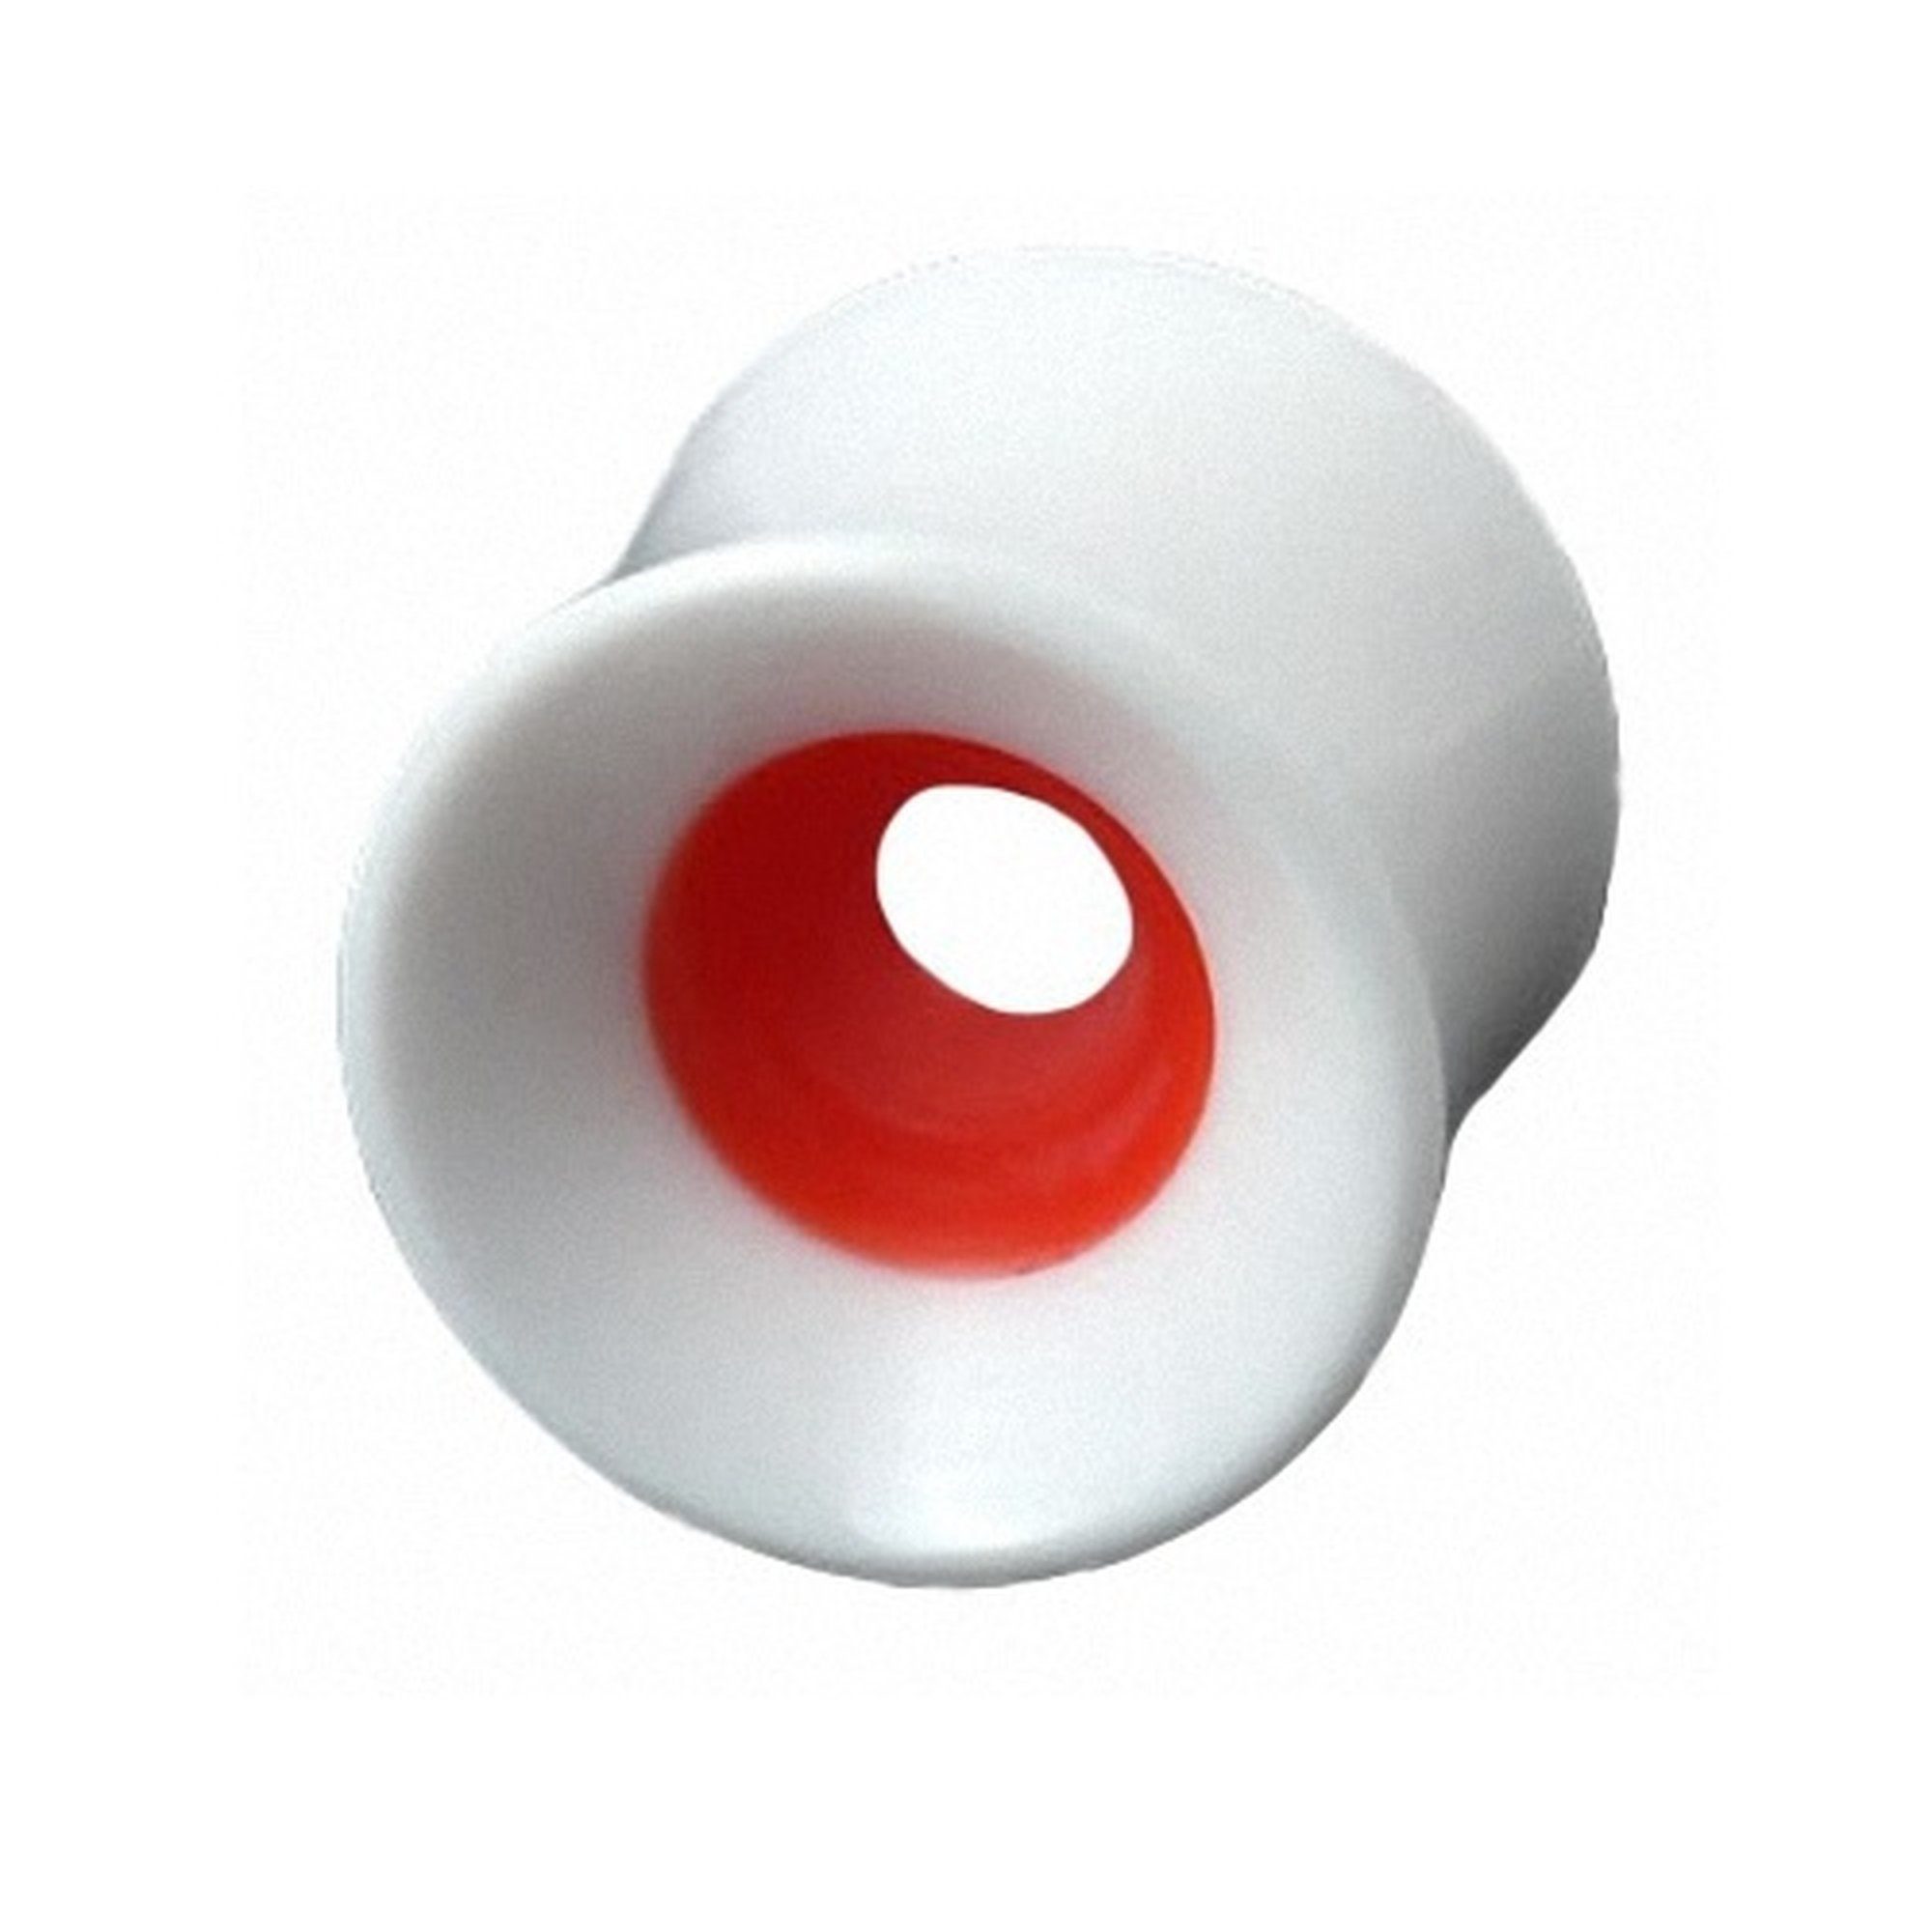 Taffstyle Plug Piercing Schmuck Horn Weiß Knochen Inlay Rot, Organic Flesh Ohr Tunnel Piercing Schmuck Horn Weiß Knochen Inlay Rot | Plugs